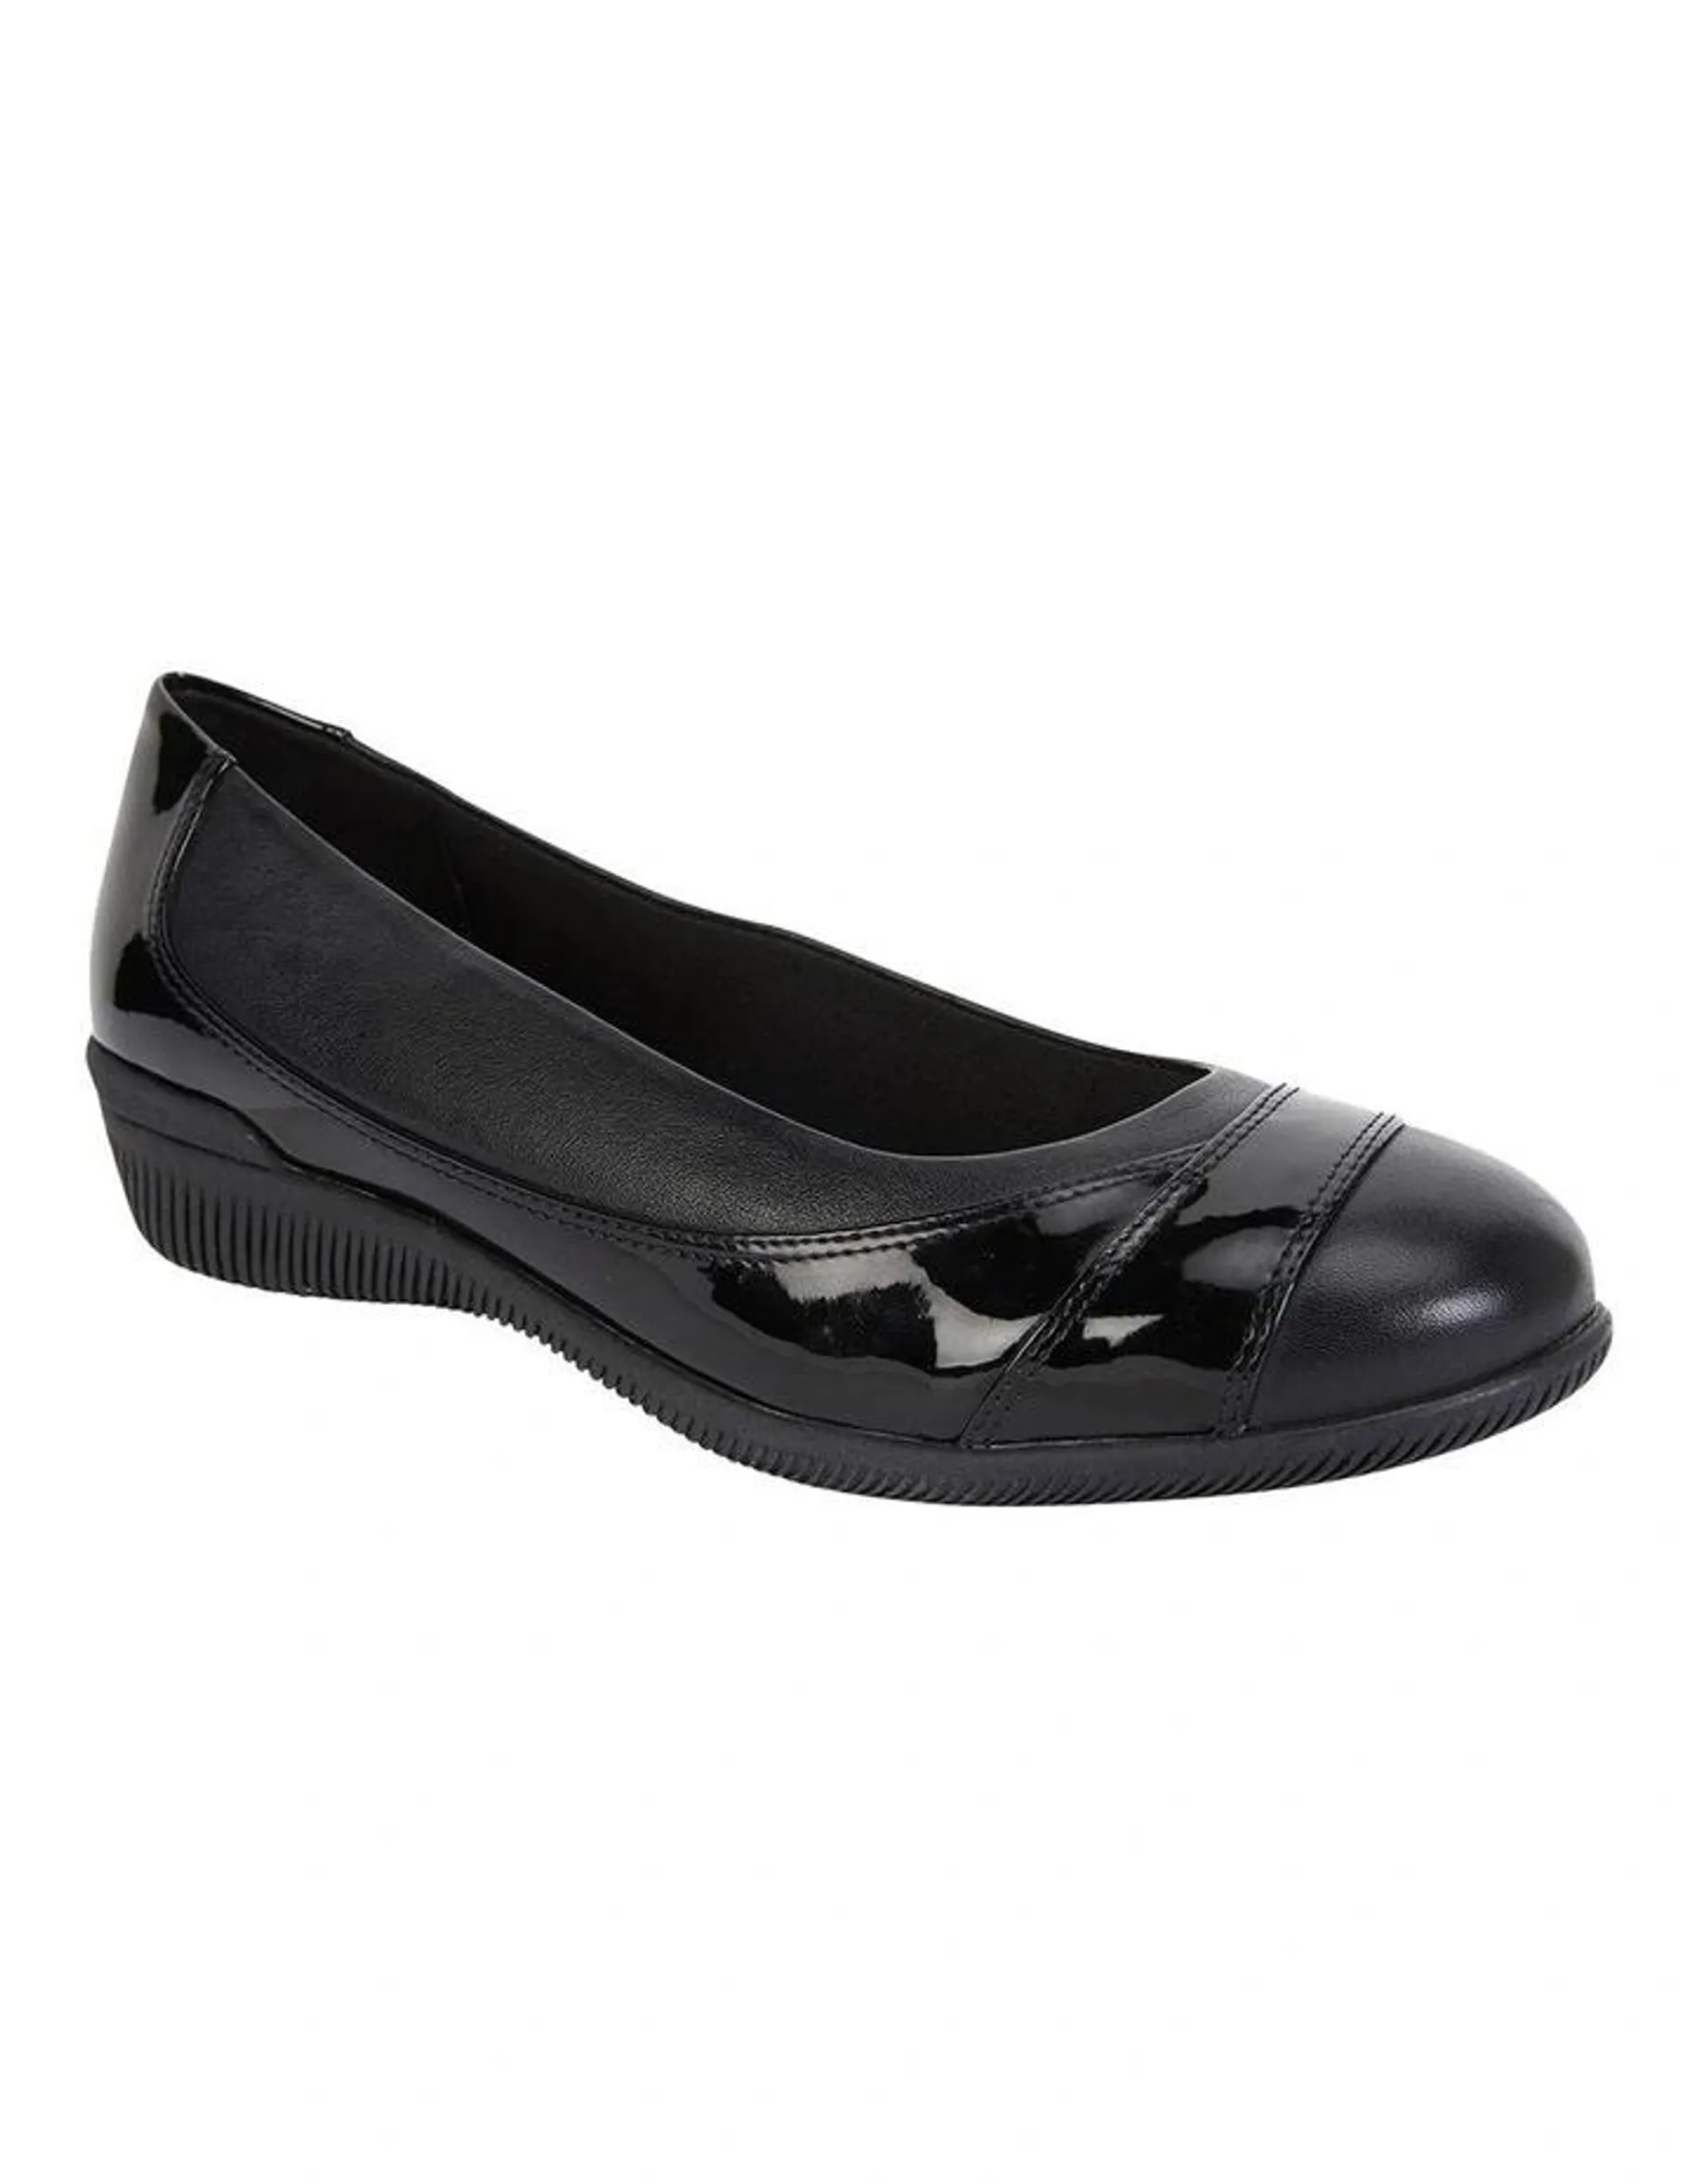 Virgo Black Glove / Patent Flat Shoes